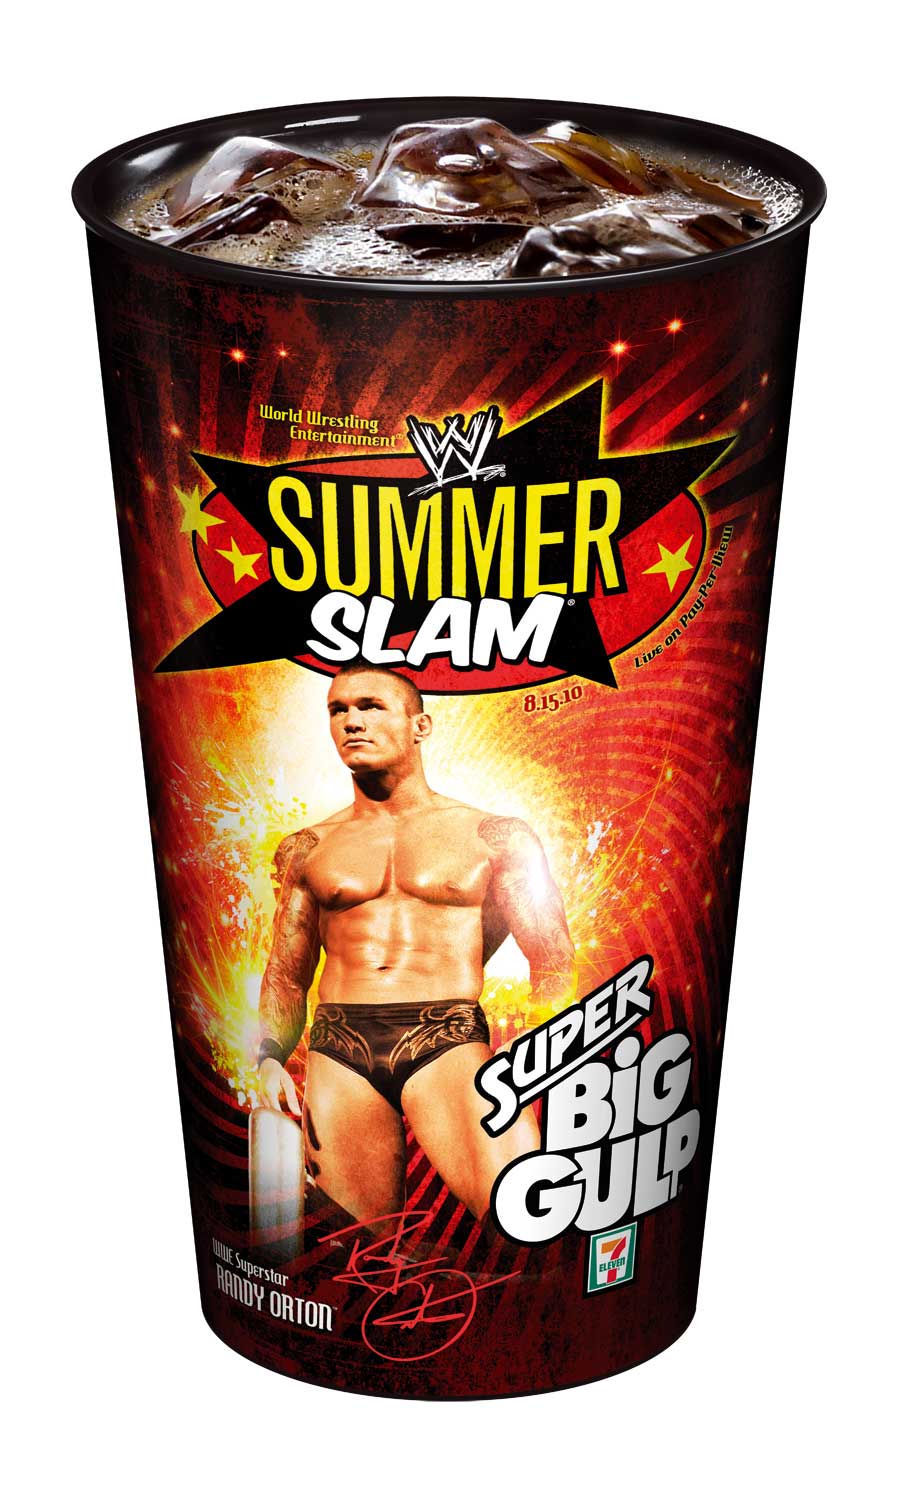 Randy Orton SummerSlam 2011 7-11 big gulp